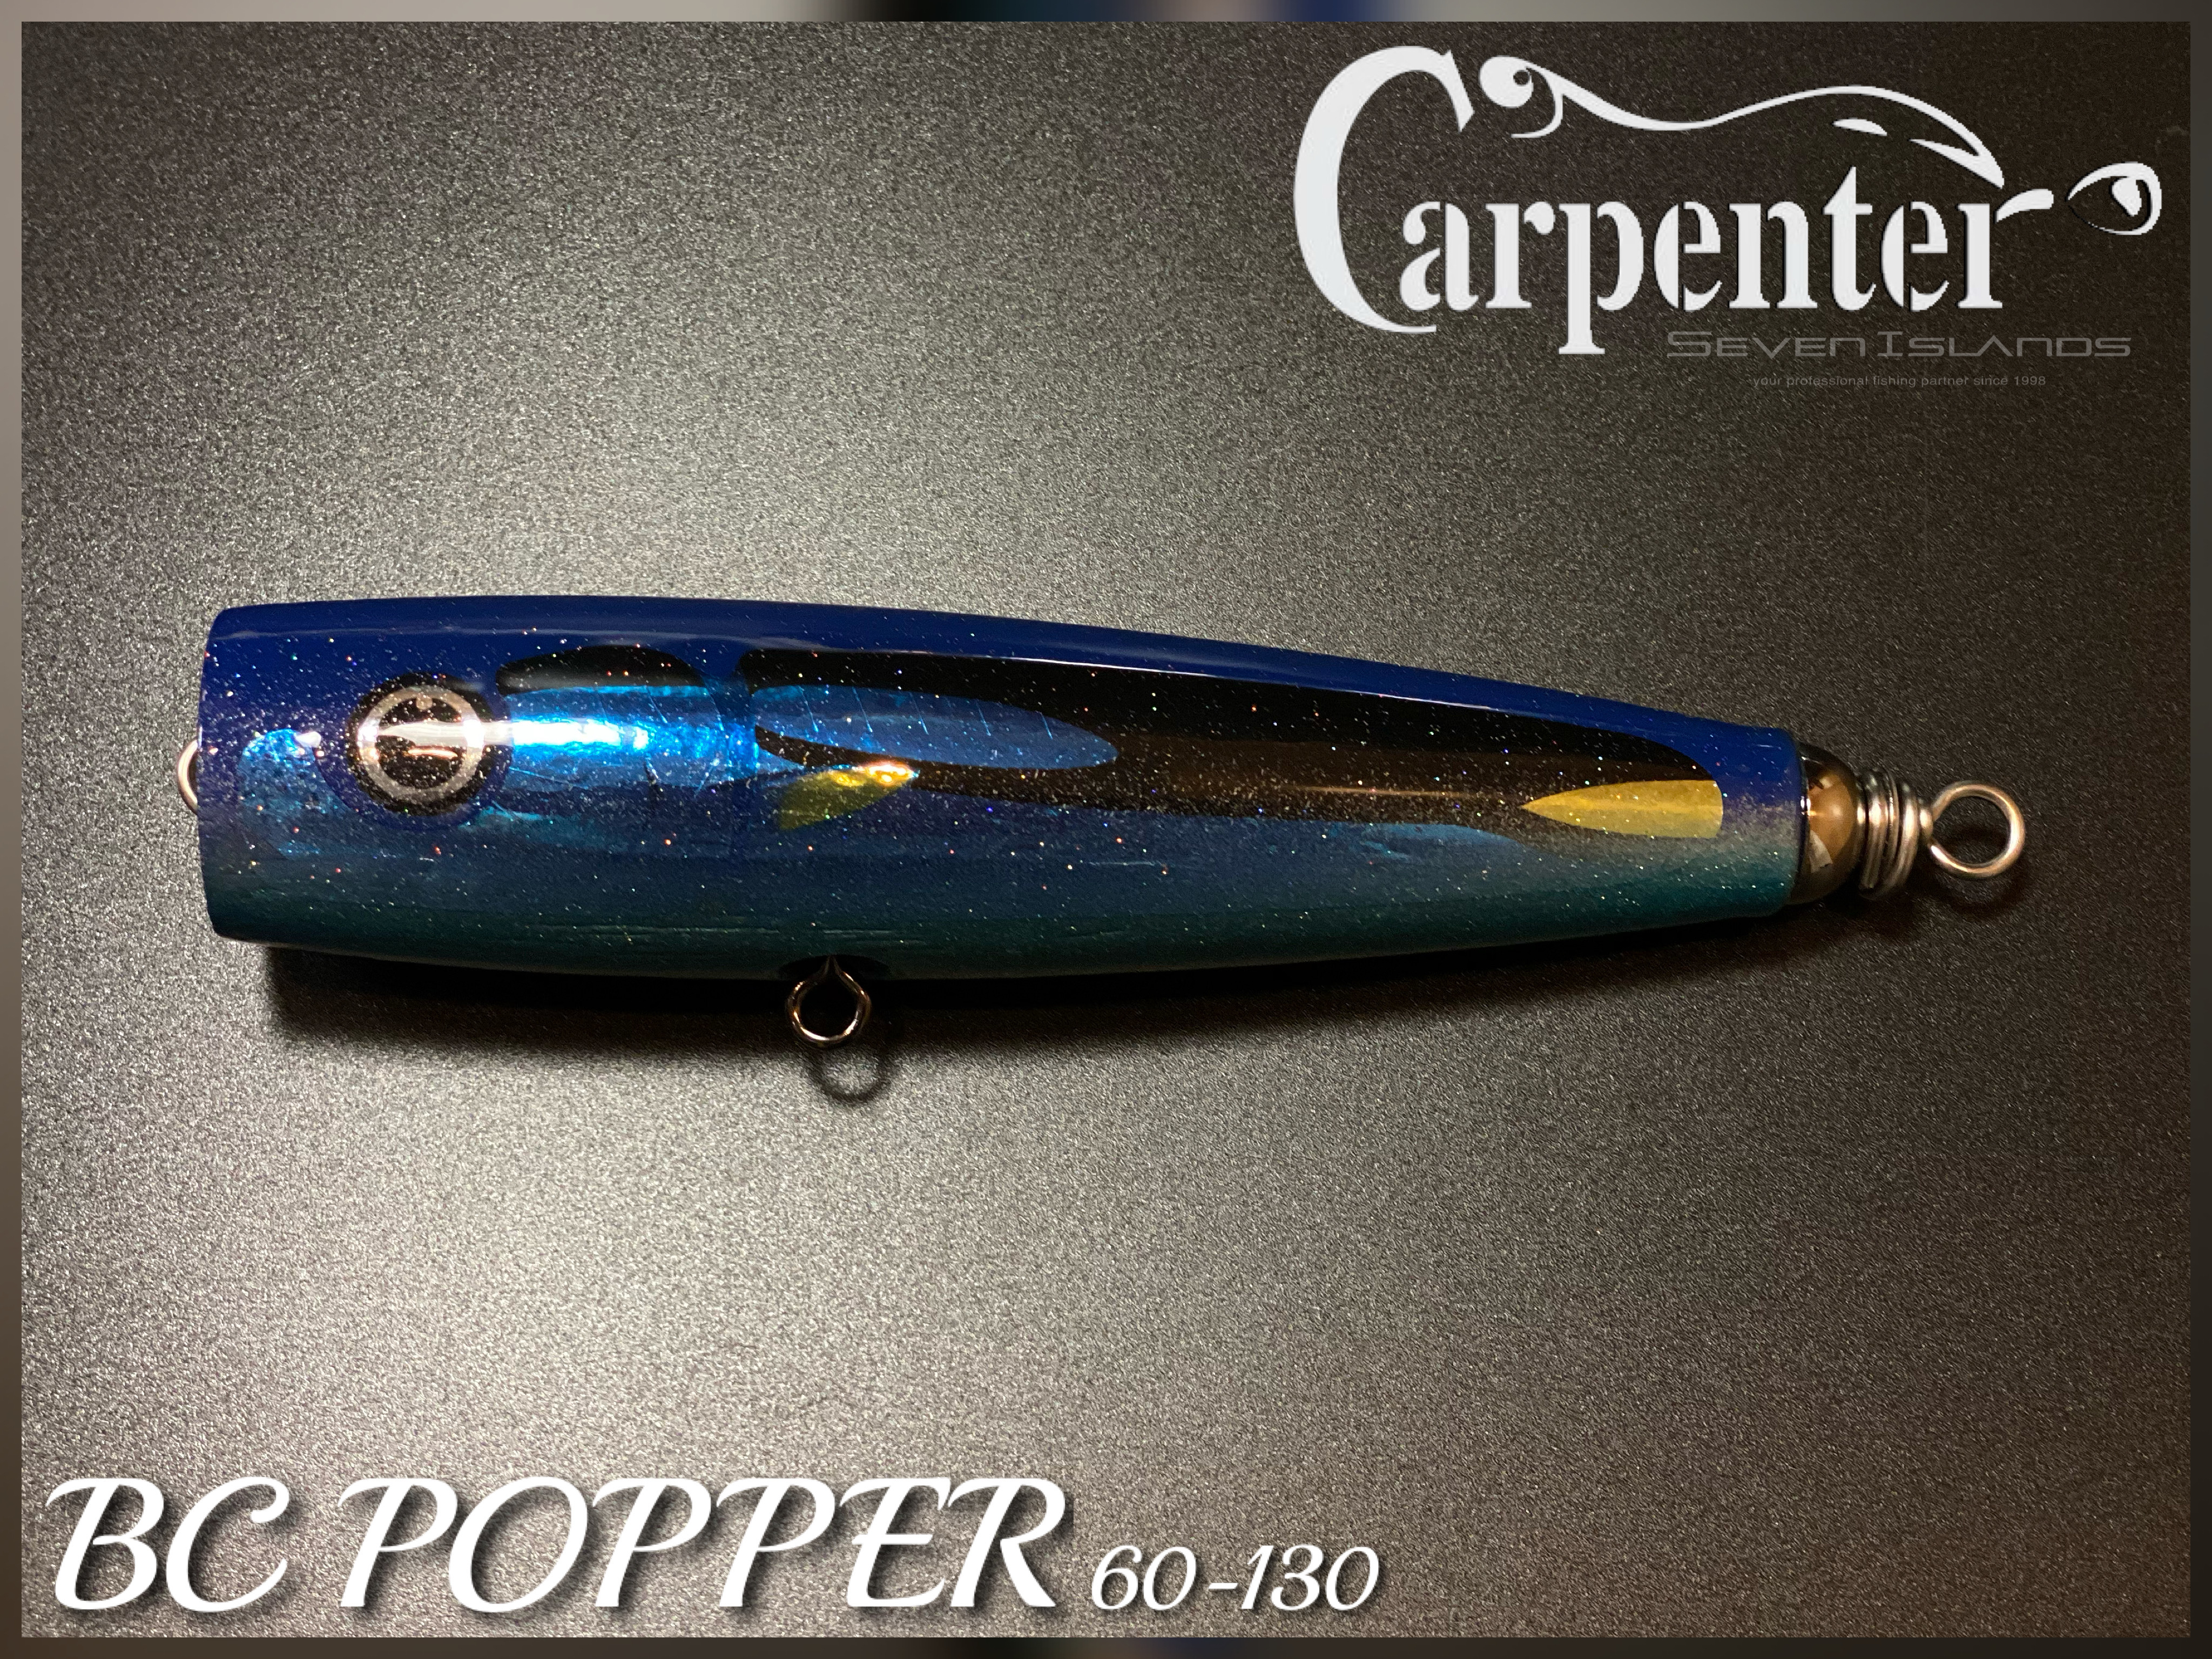 CARPENTER BC POPPER 60-130 POPPING LURE